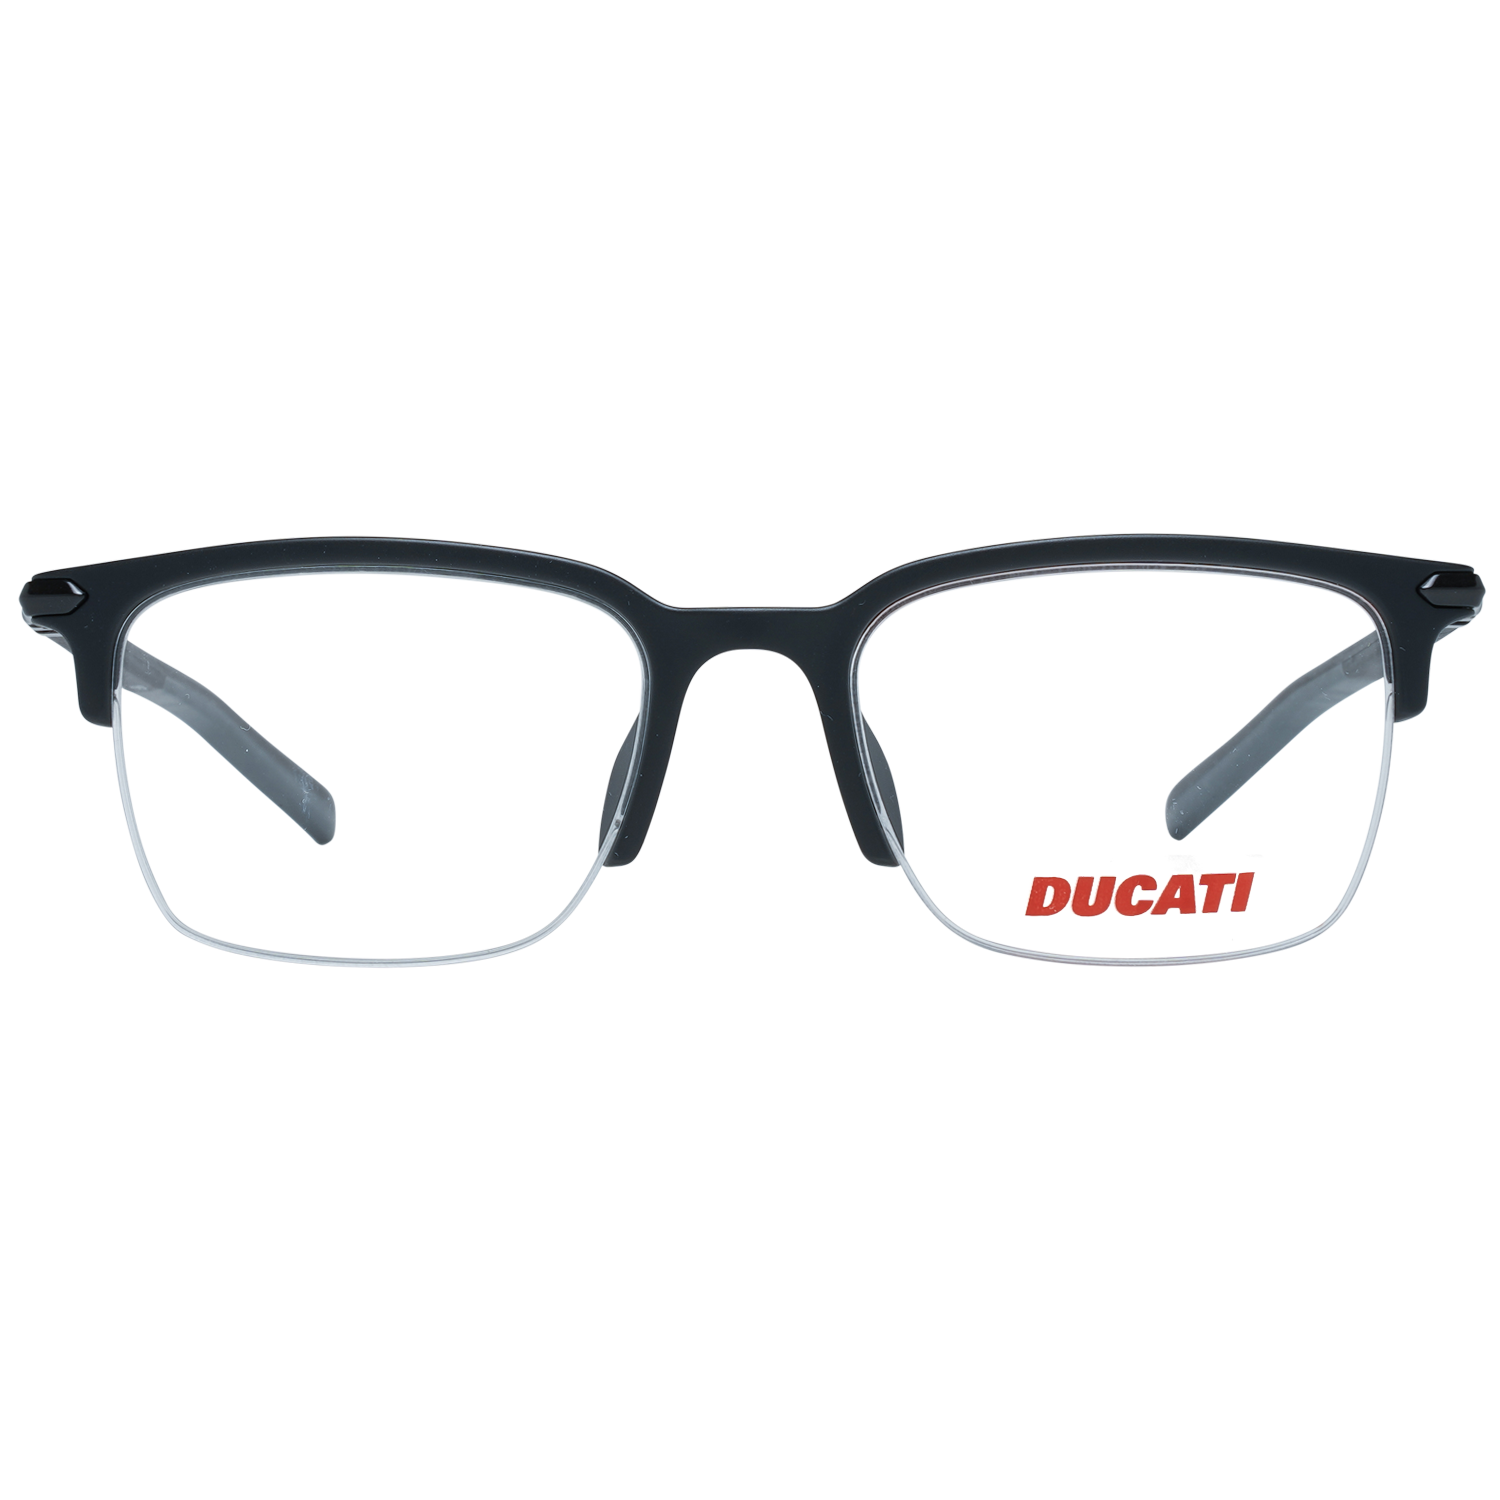 Ducati Frames Ducati Optical Frame DA1003 002 52 Eyeglasses Eyewear UK USA Australia 